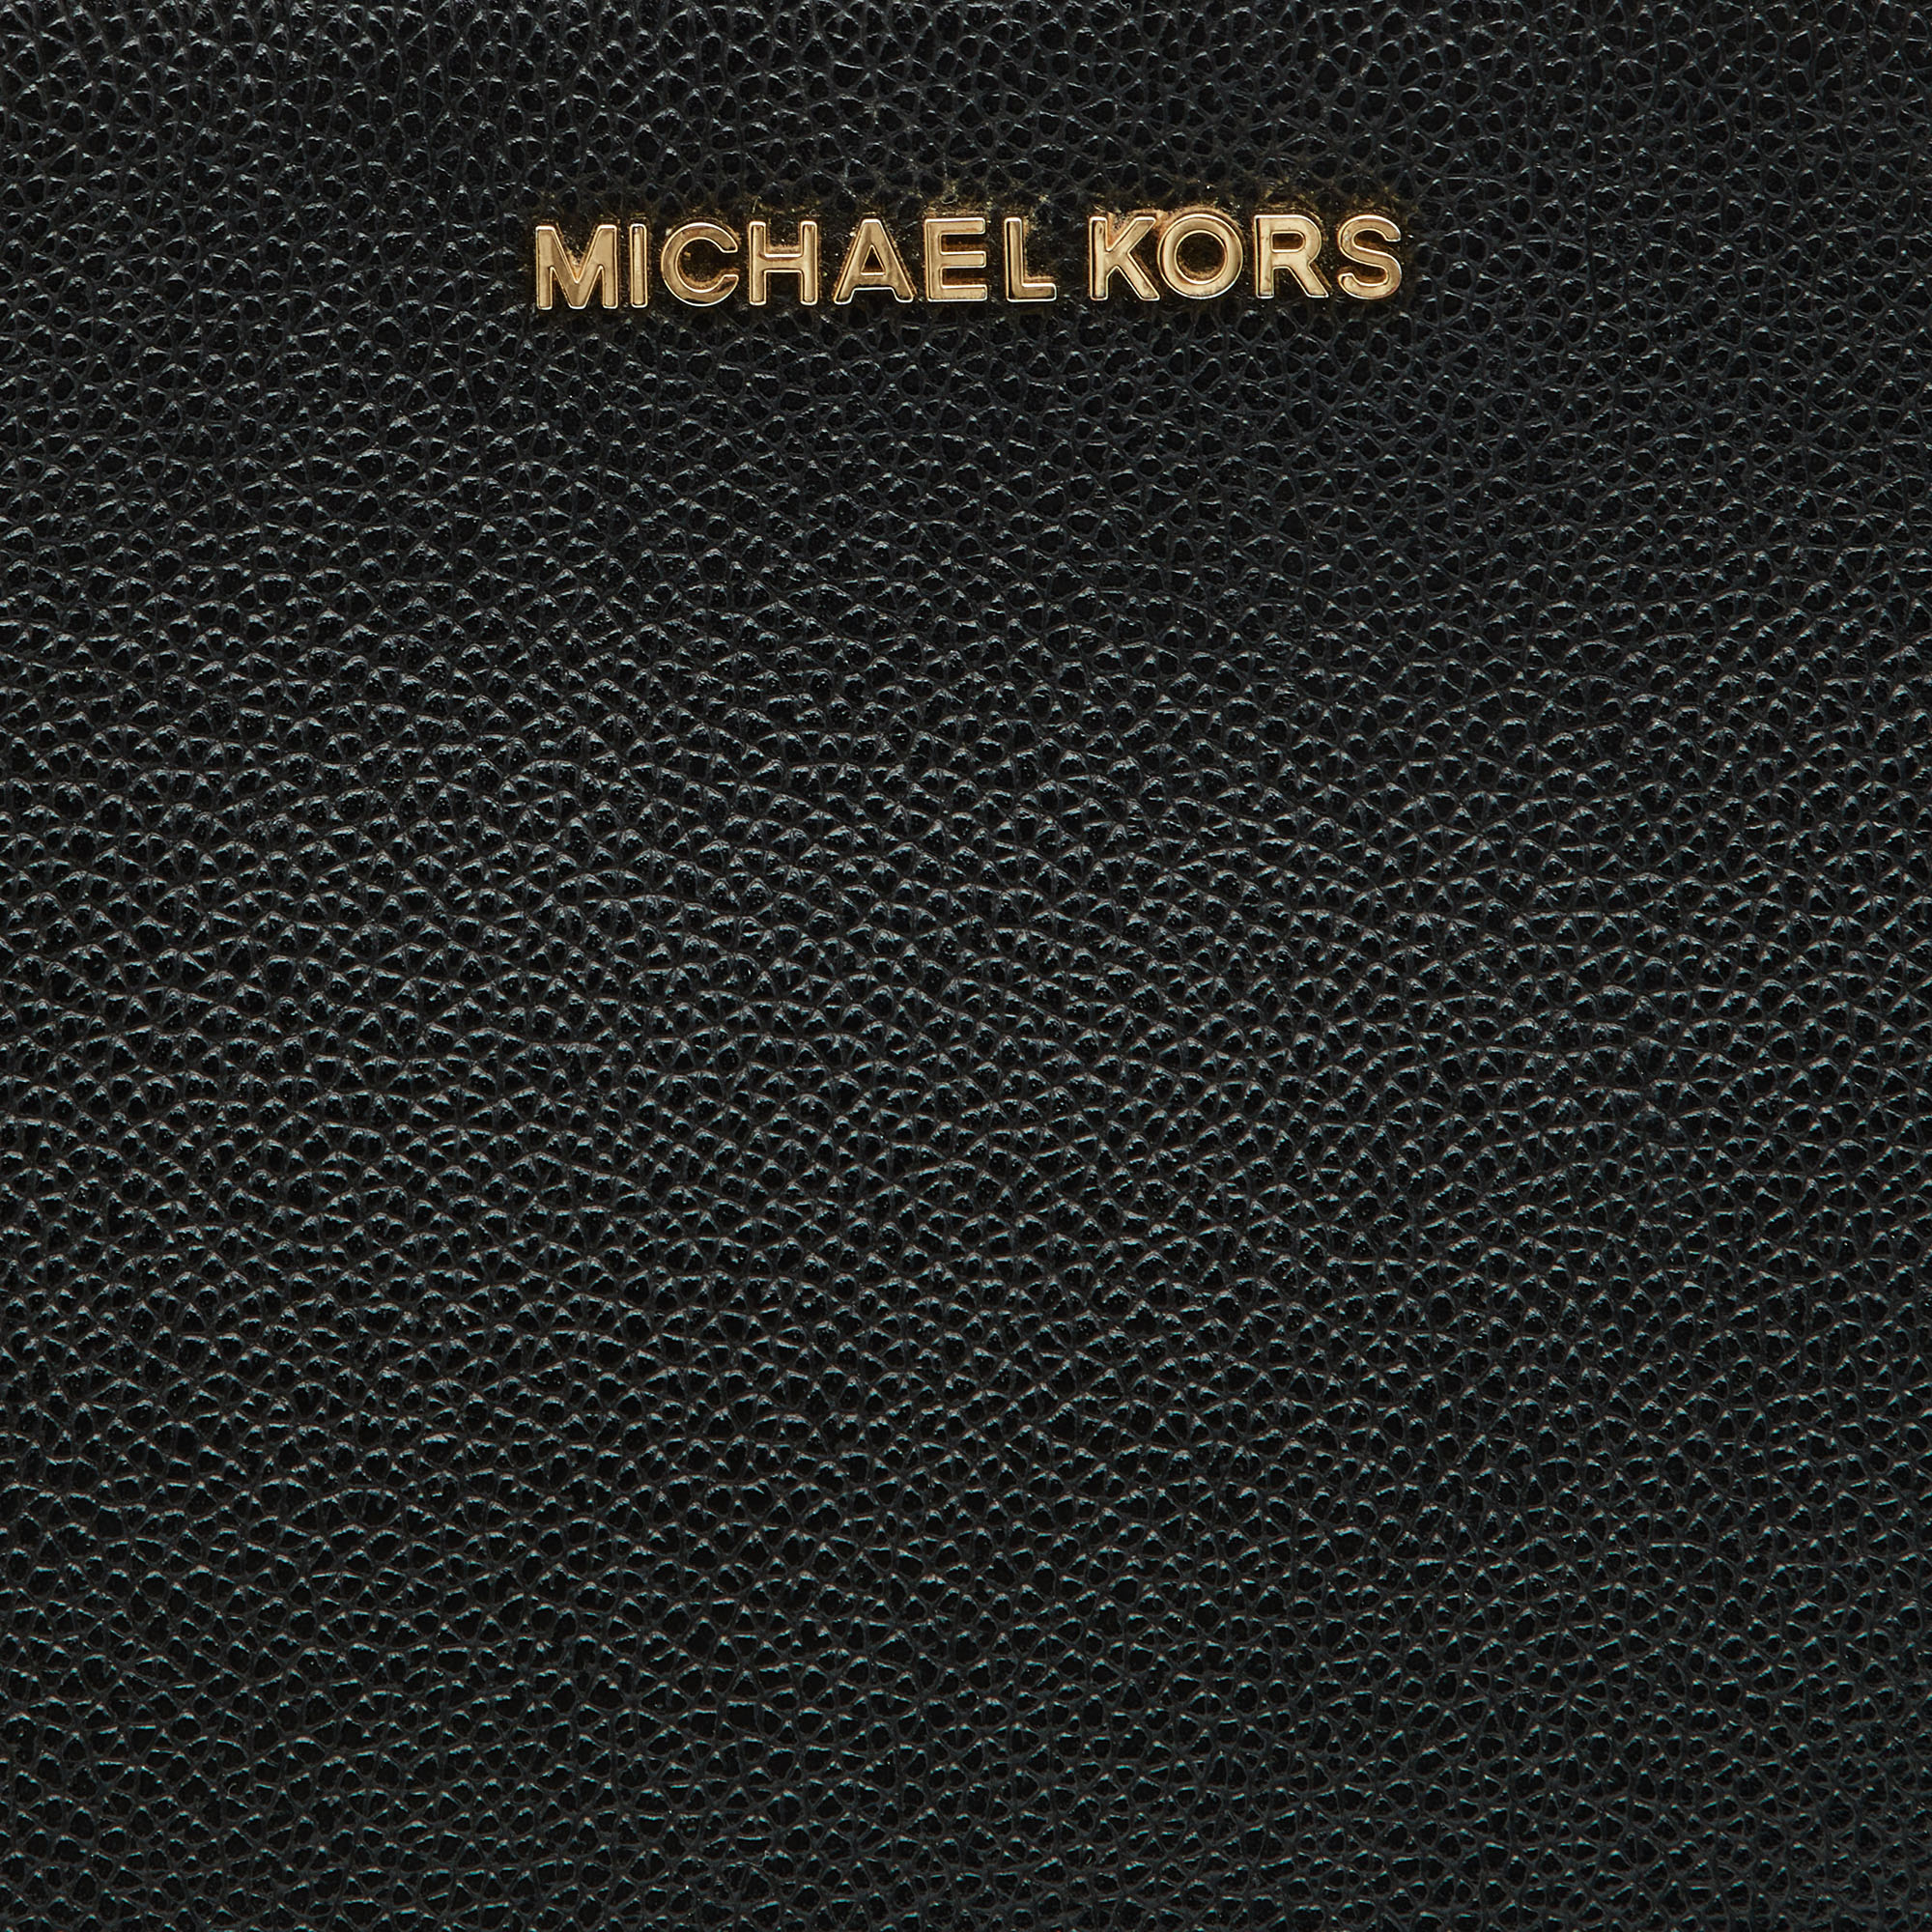 Michael Kors Black Leather Nicole Crossbody Bag